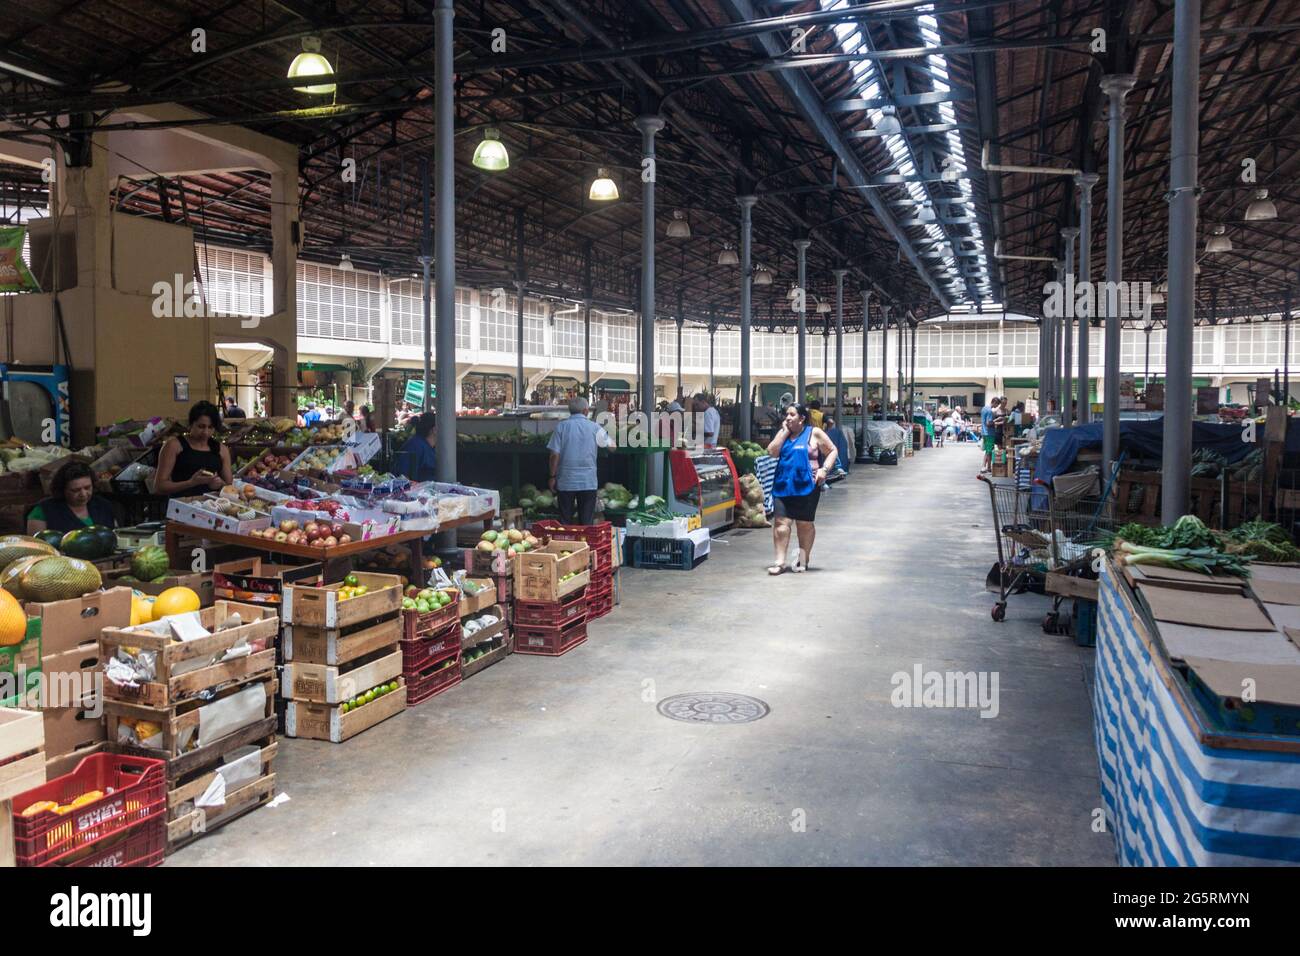 SAO PAULO, BRAZIL - FEBRUARY 3, 2015: View of Mercado Municipal market in Sao Paulo, Brazil Stock Photo